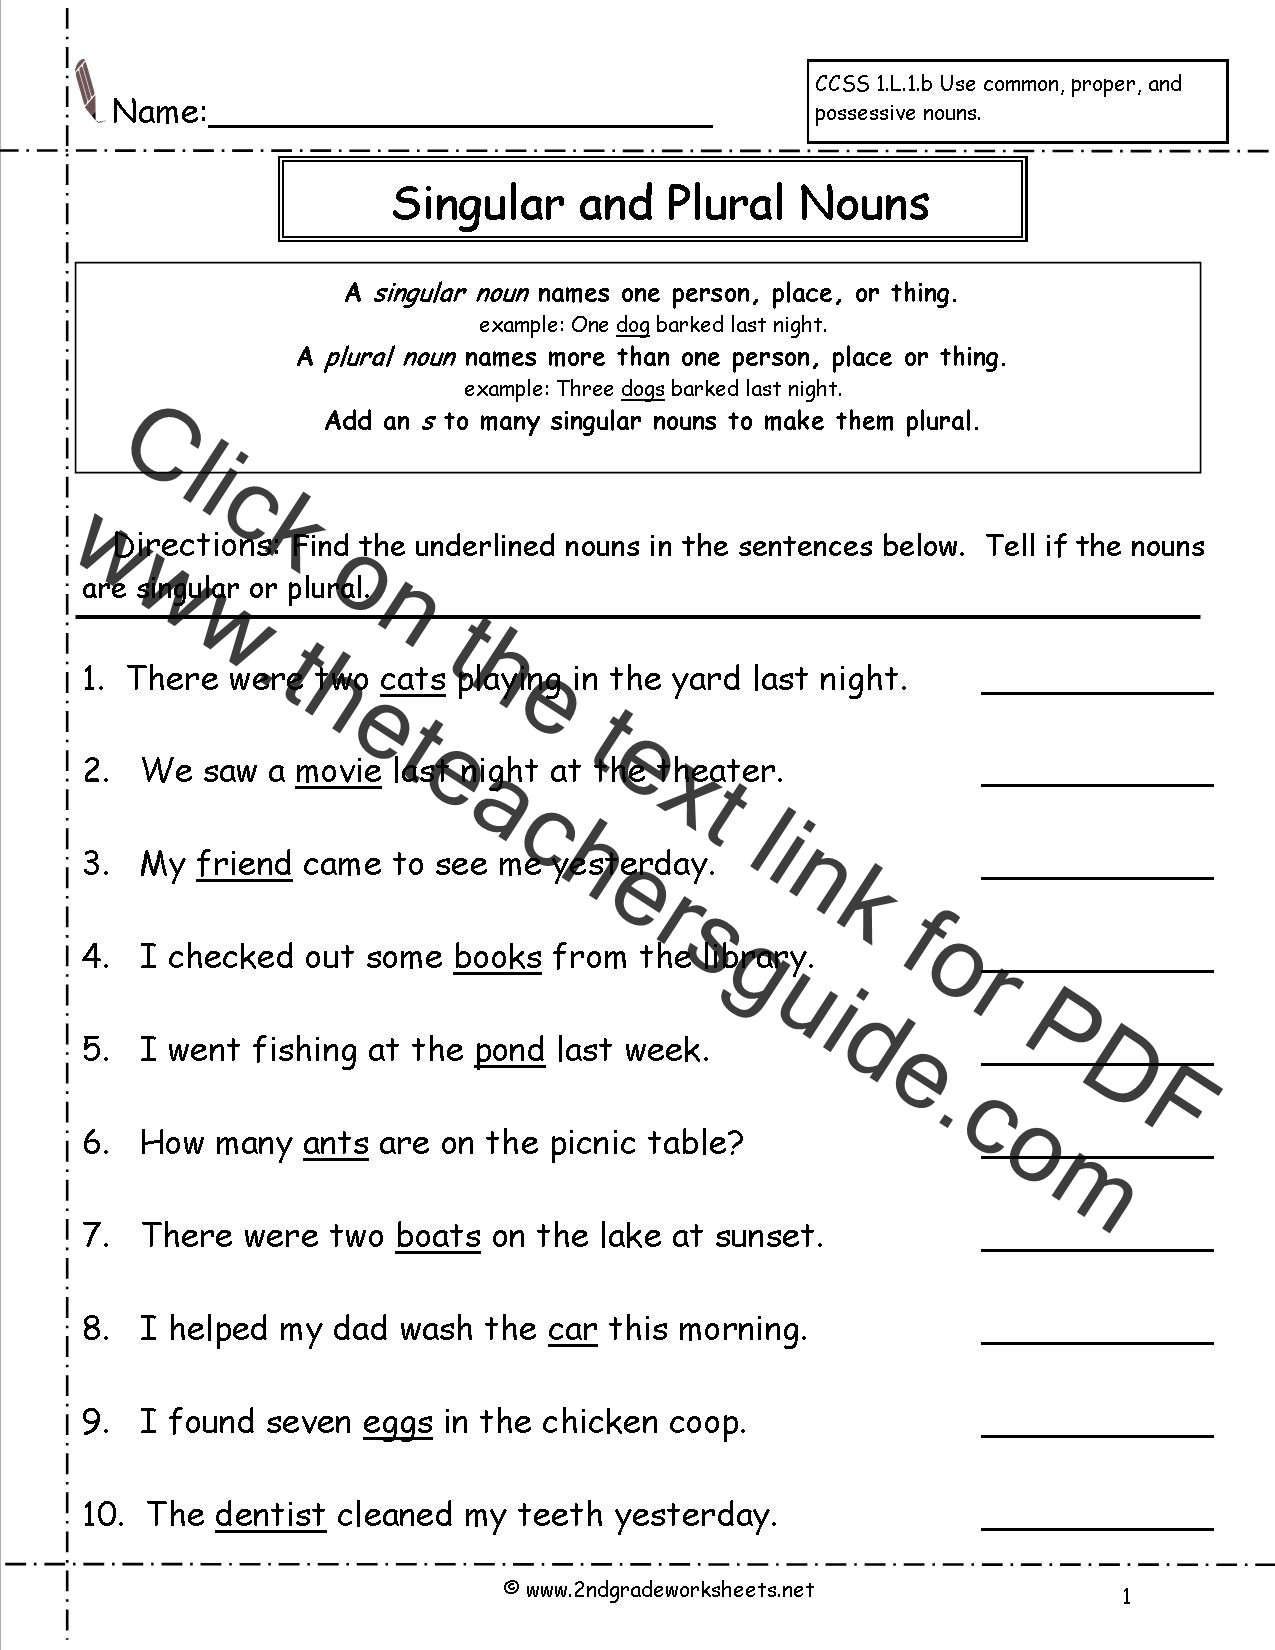 Plural Nouns Worksheet 2nd Grade